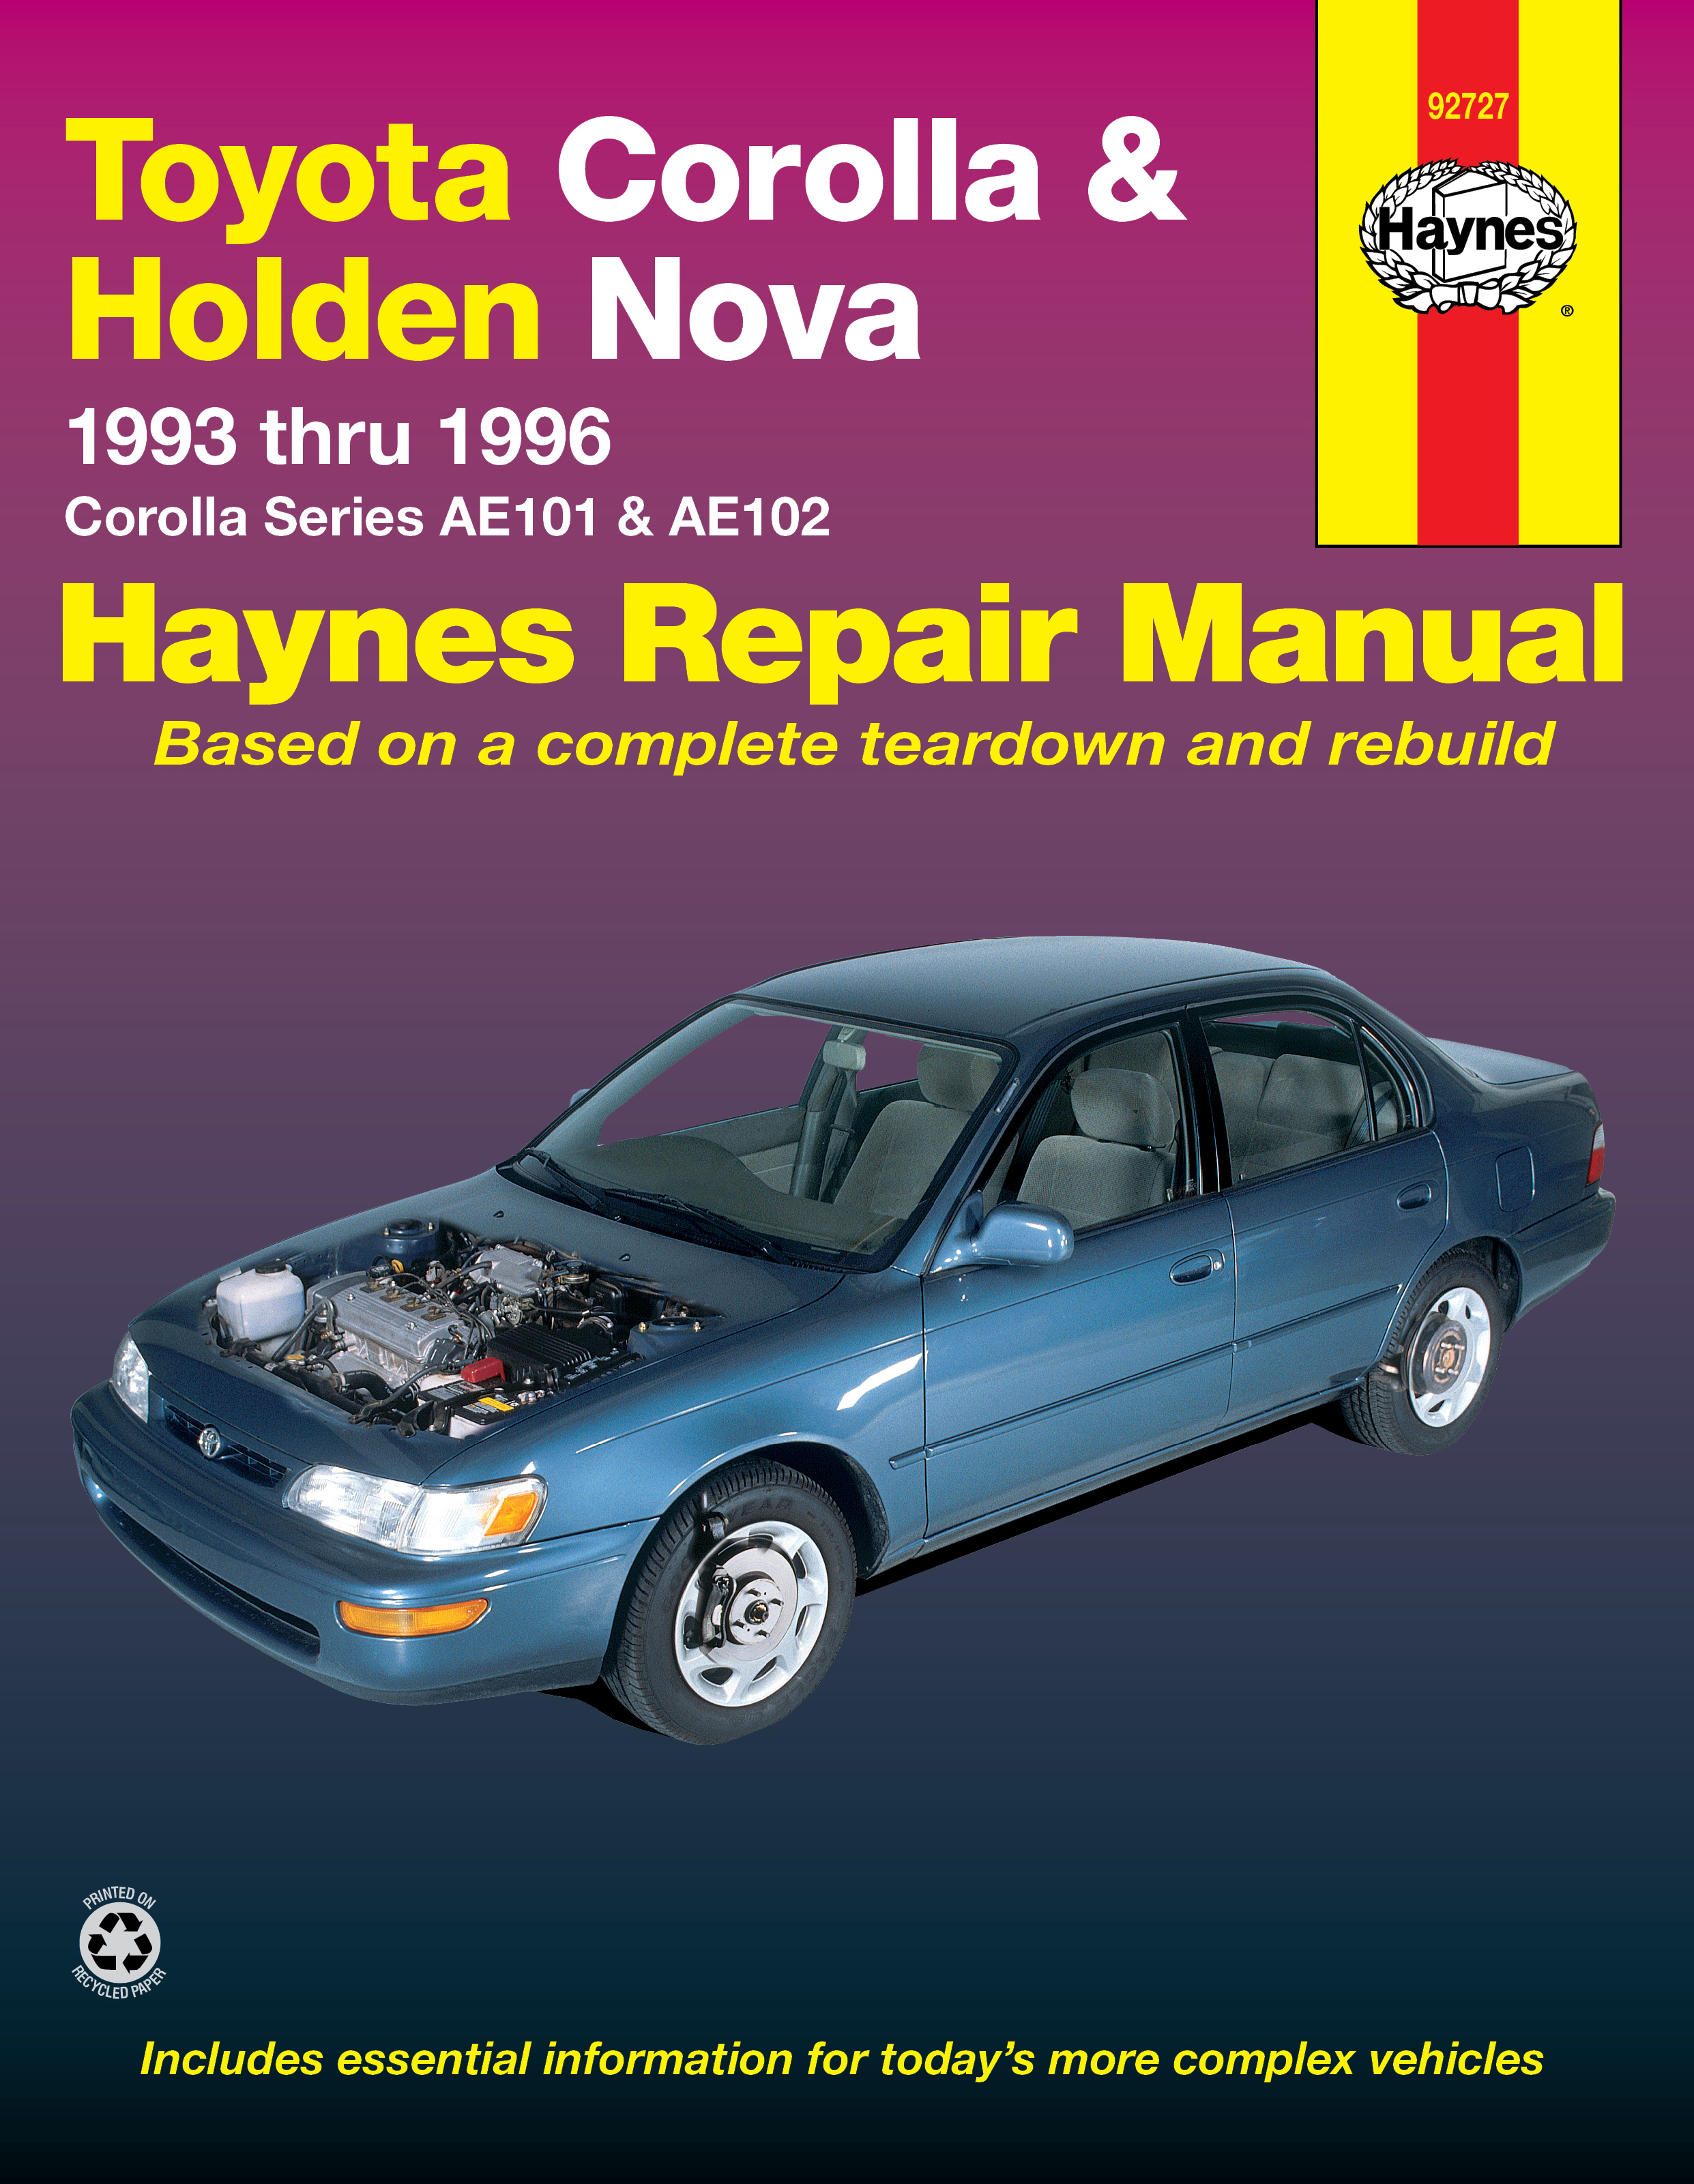 1996 toyota corolla repair manual pdf free download download open jdk 11 for windows